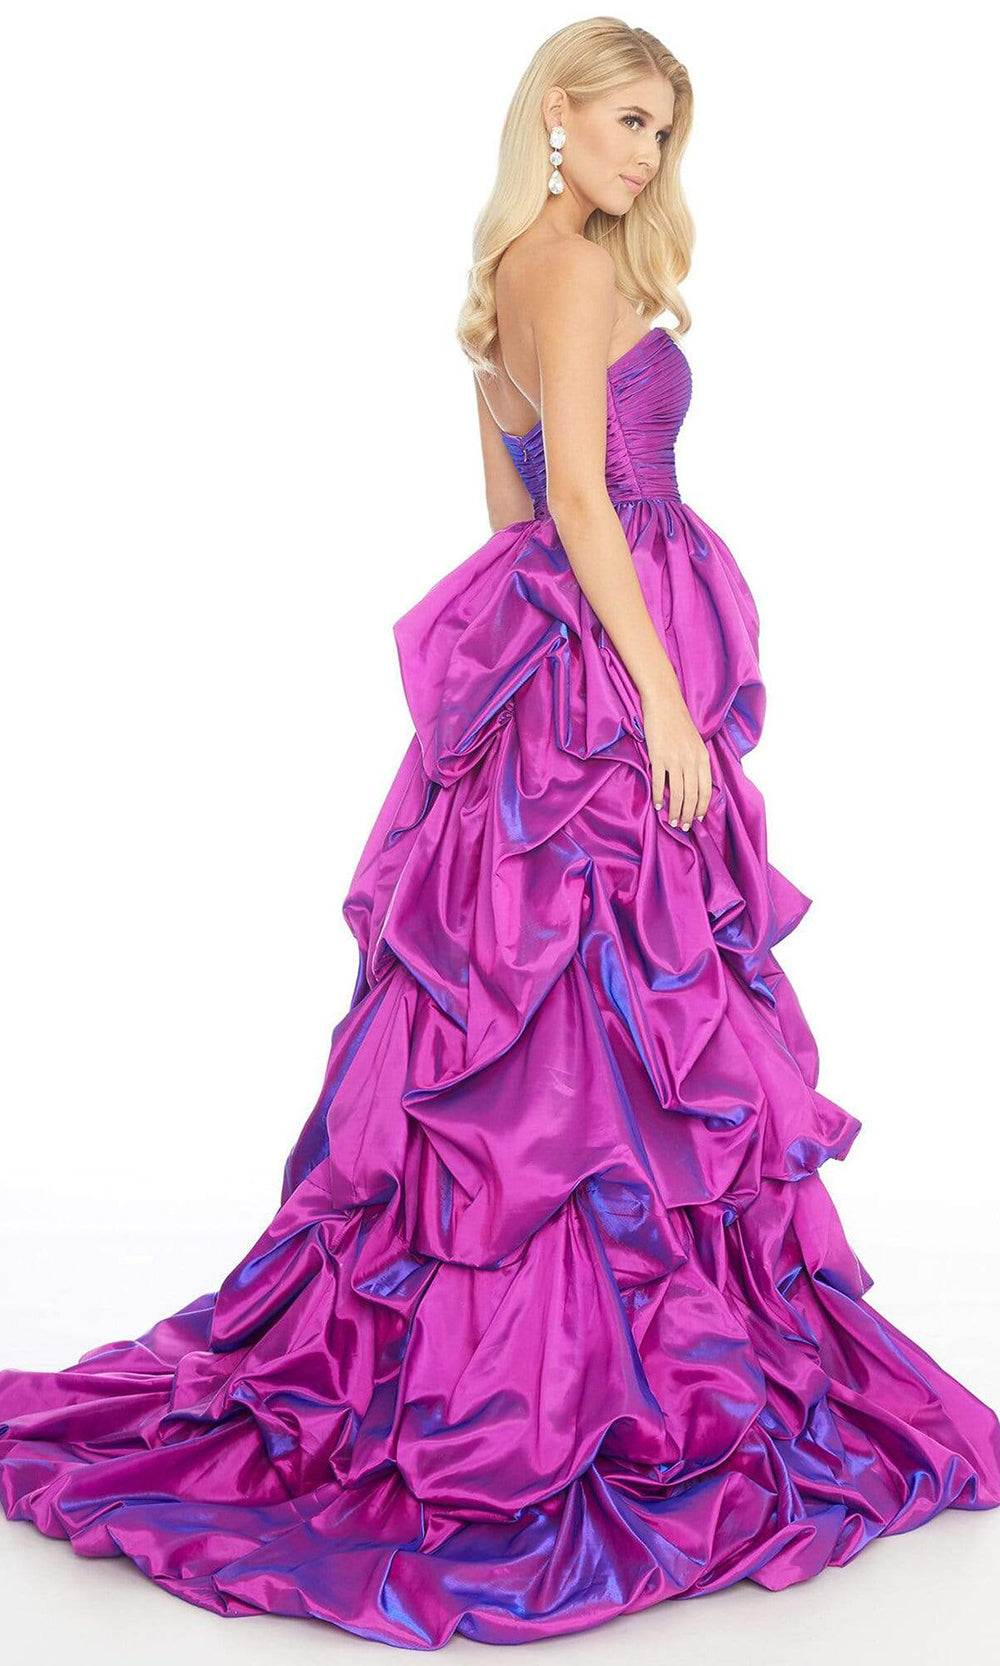 Ashley Lauren - Strapless High Slit Ruffled Gown 1750SC In Pink